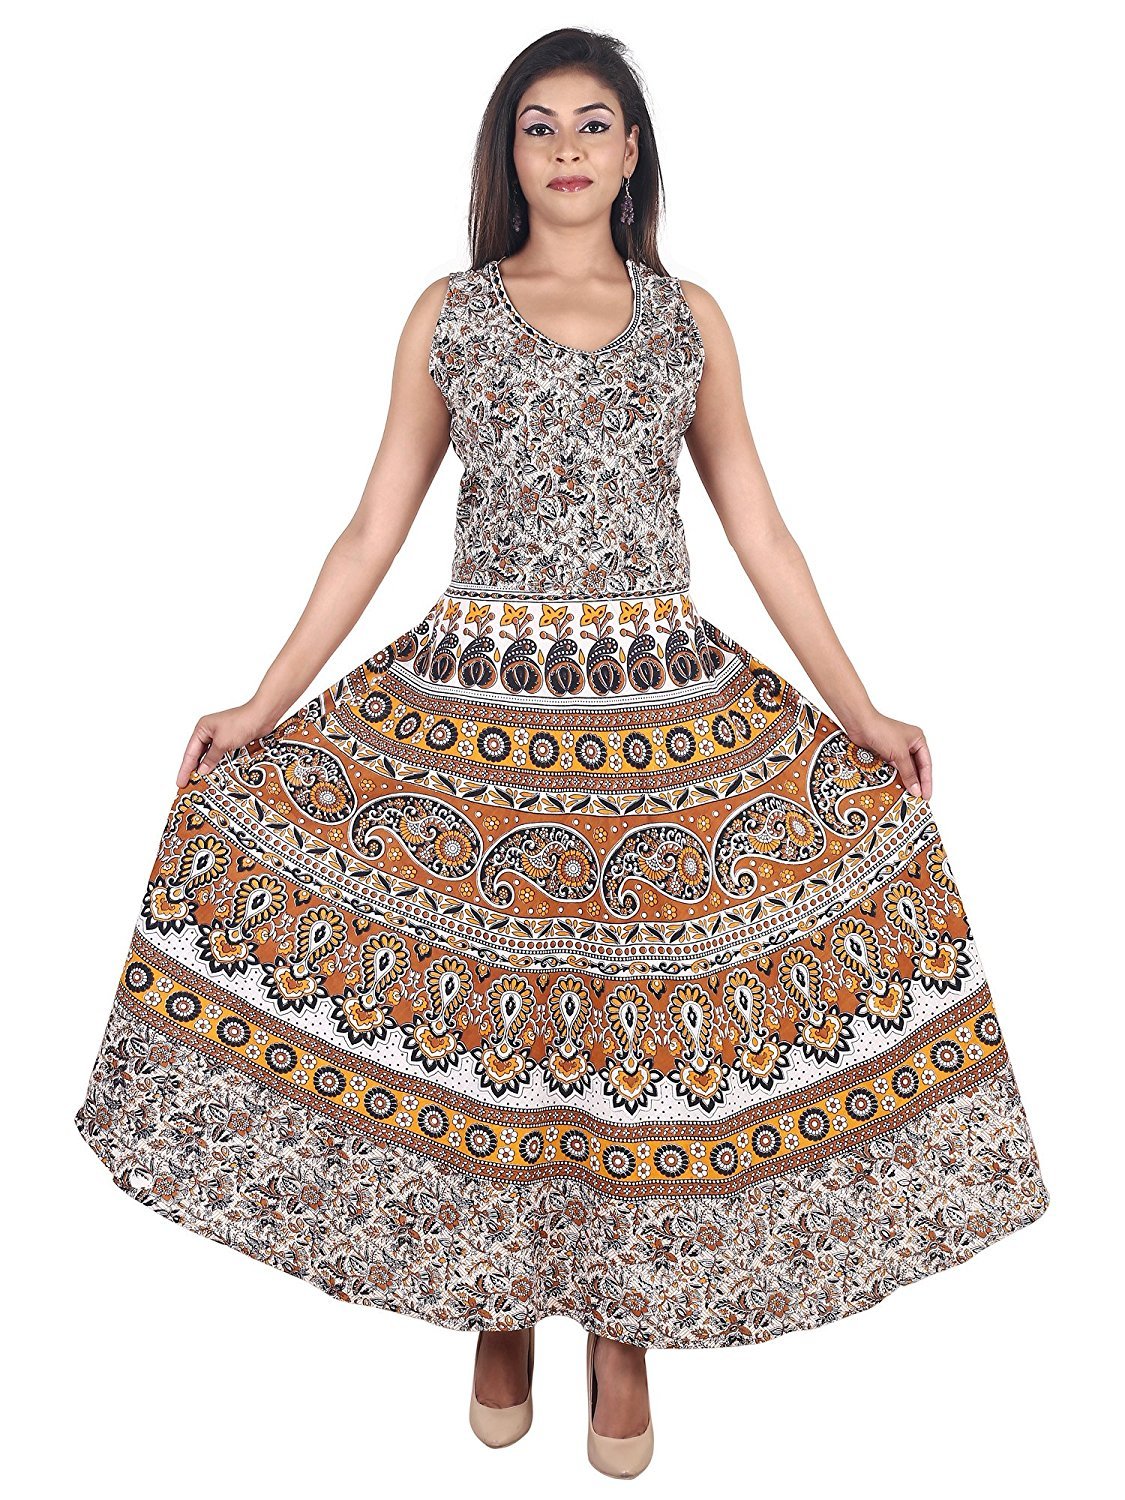 Jaipuri printed long maxi dress